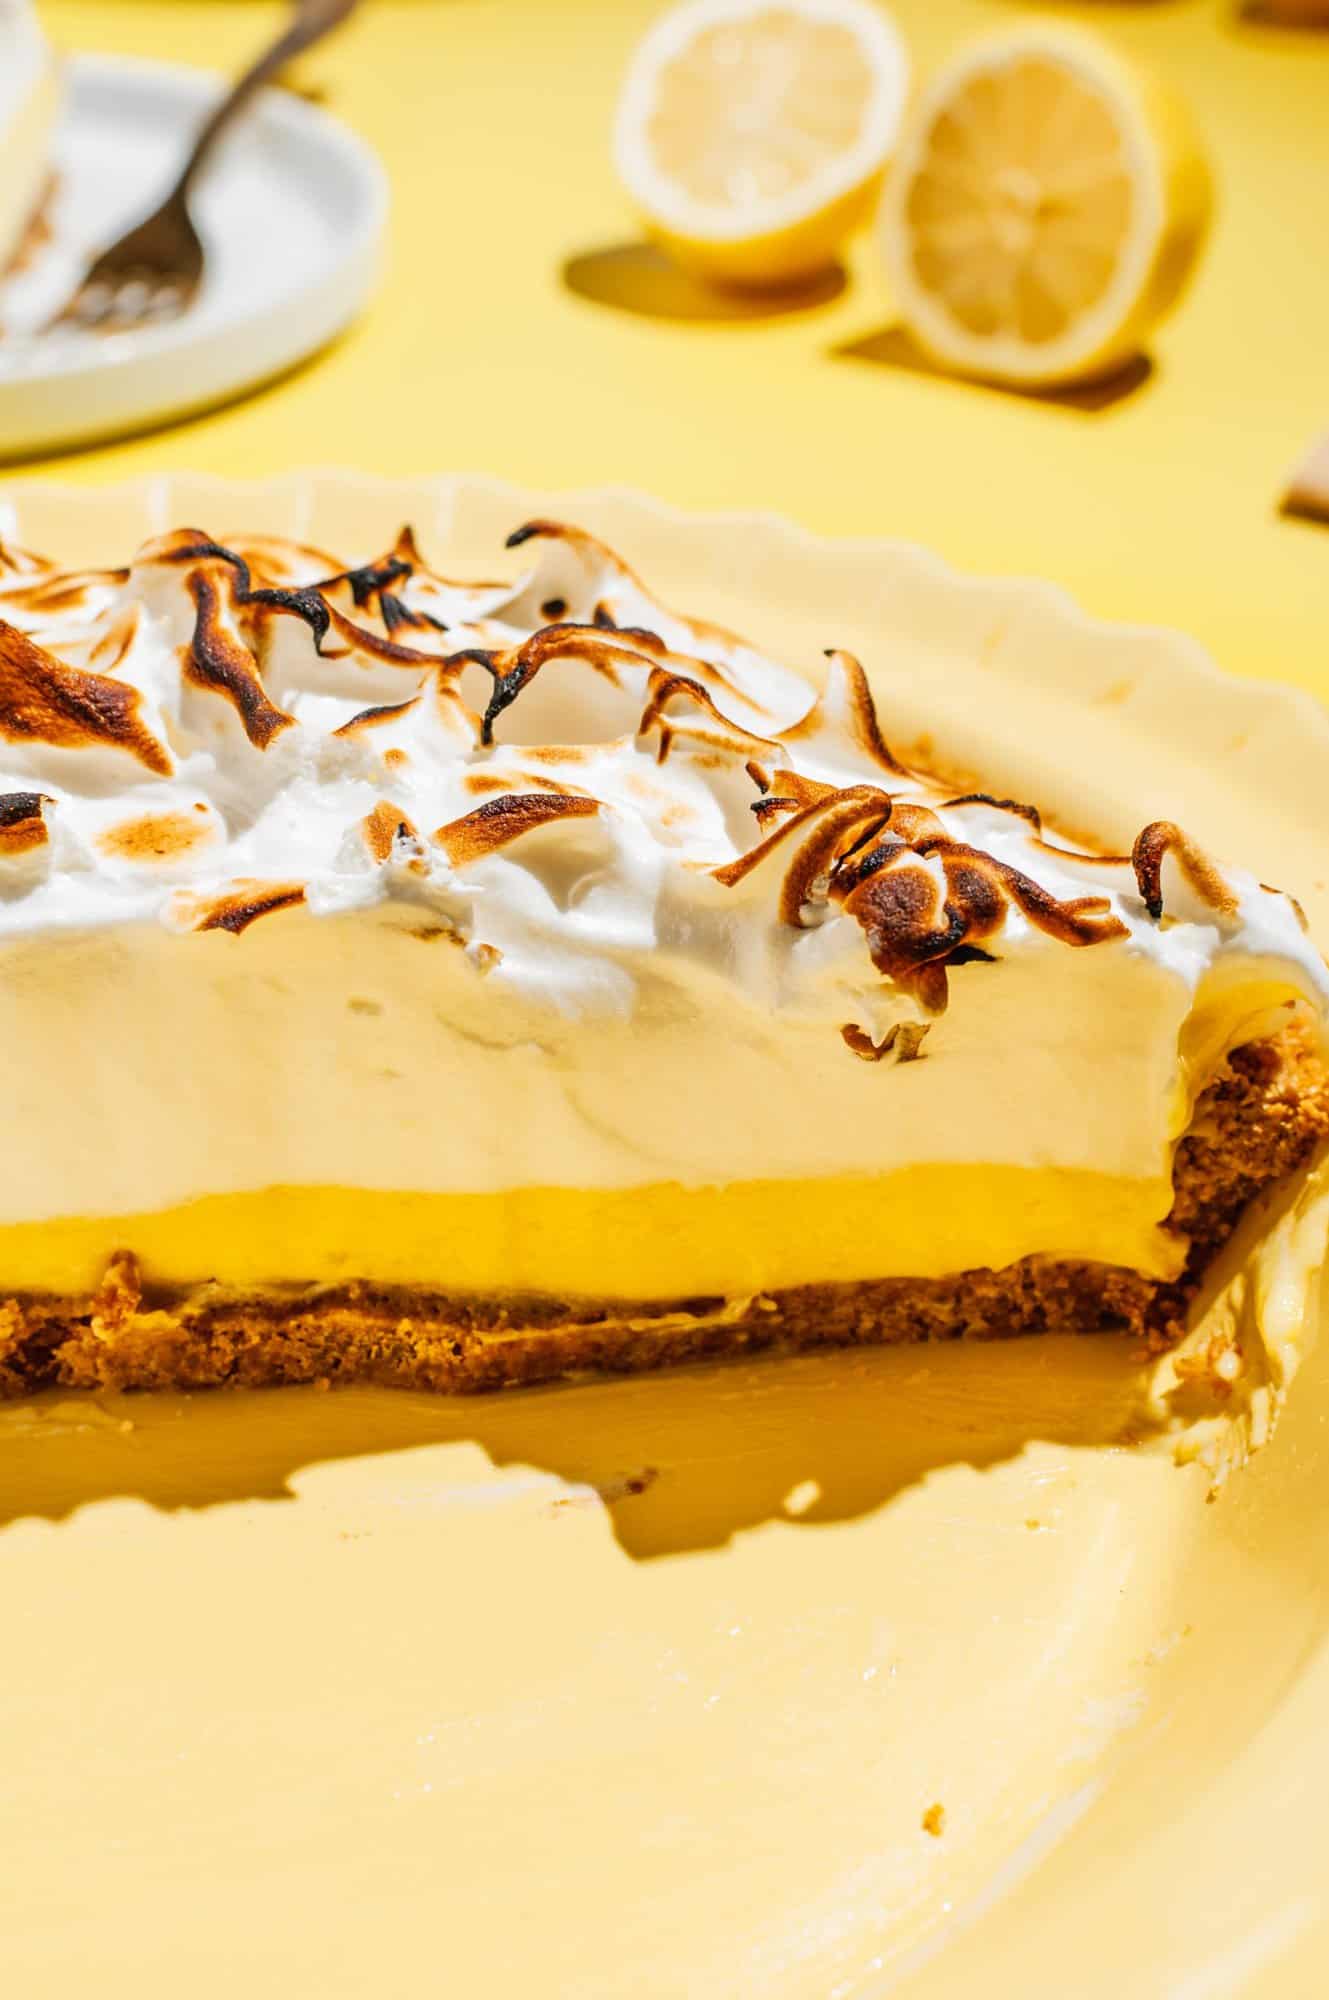 lemon meringue pie cut in half to show inside filling and graham cracker crust